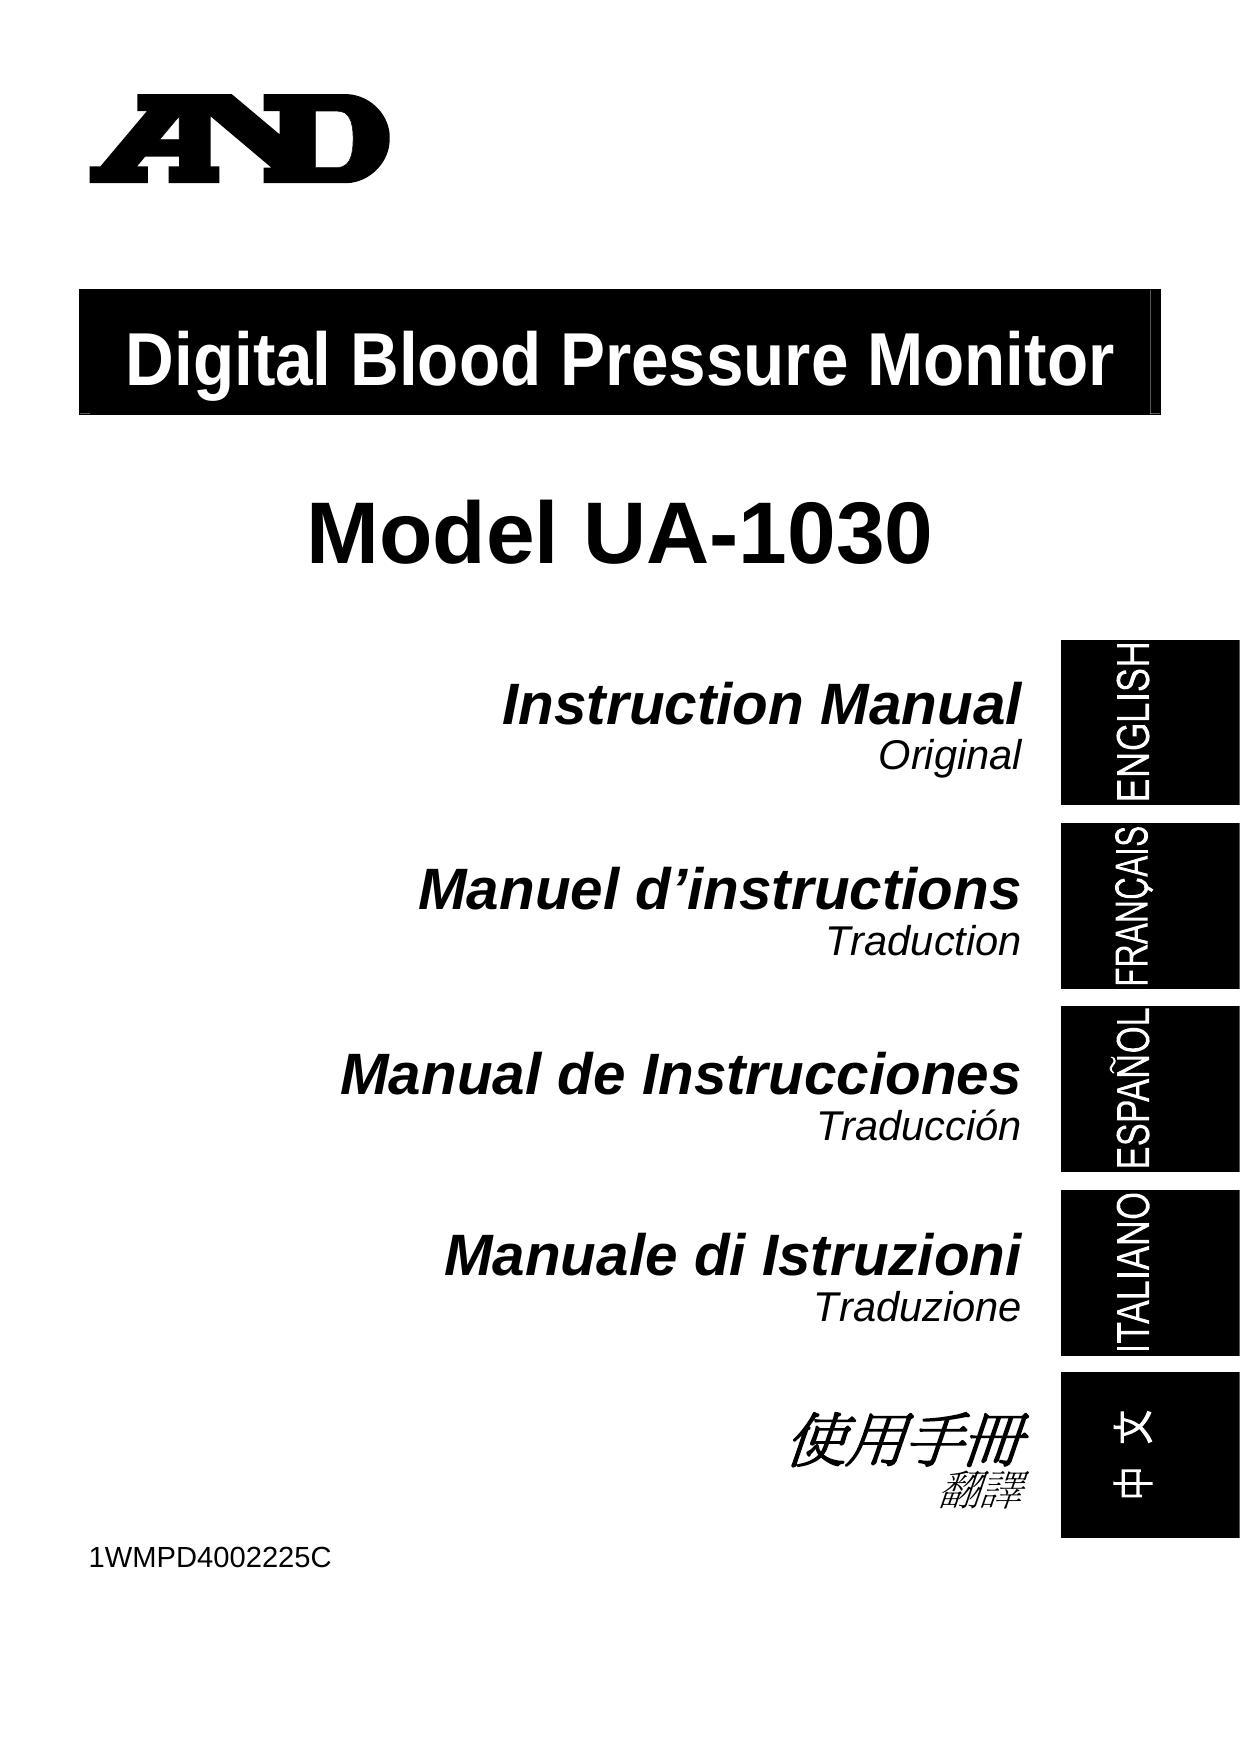 ad-digital-blood-pressure-monitor-model-ua-1030-instruction-manual.pdf